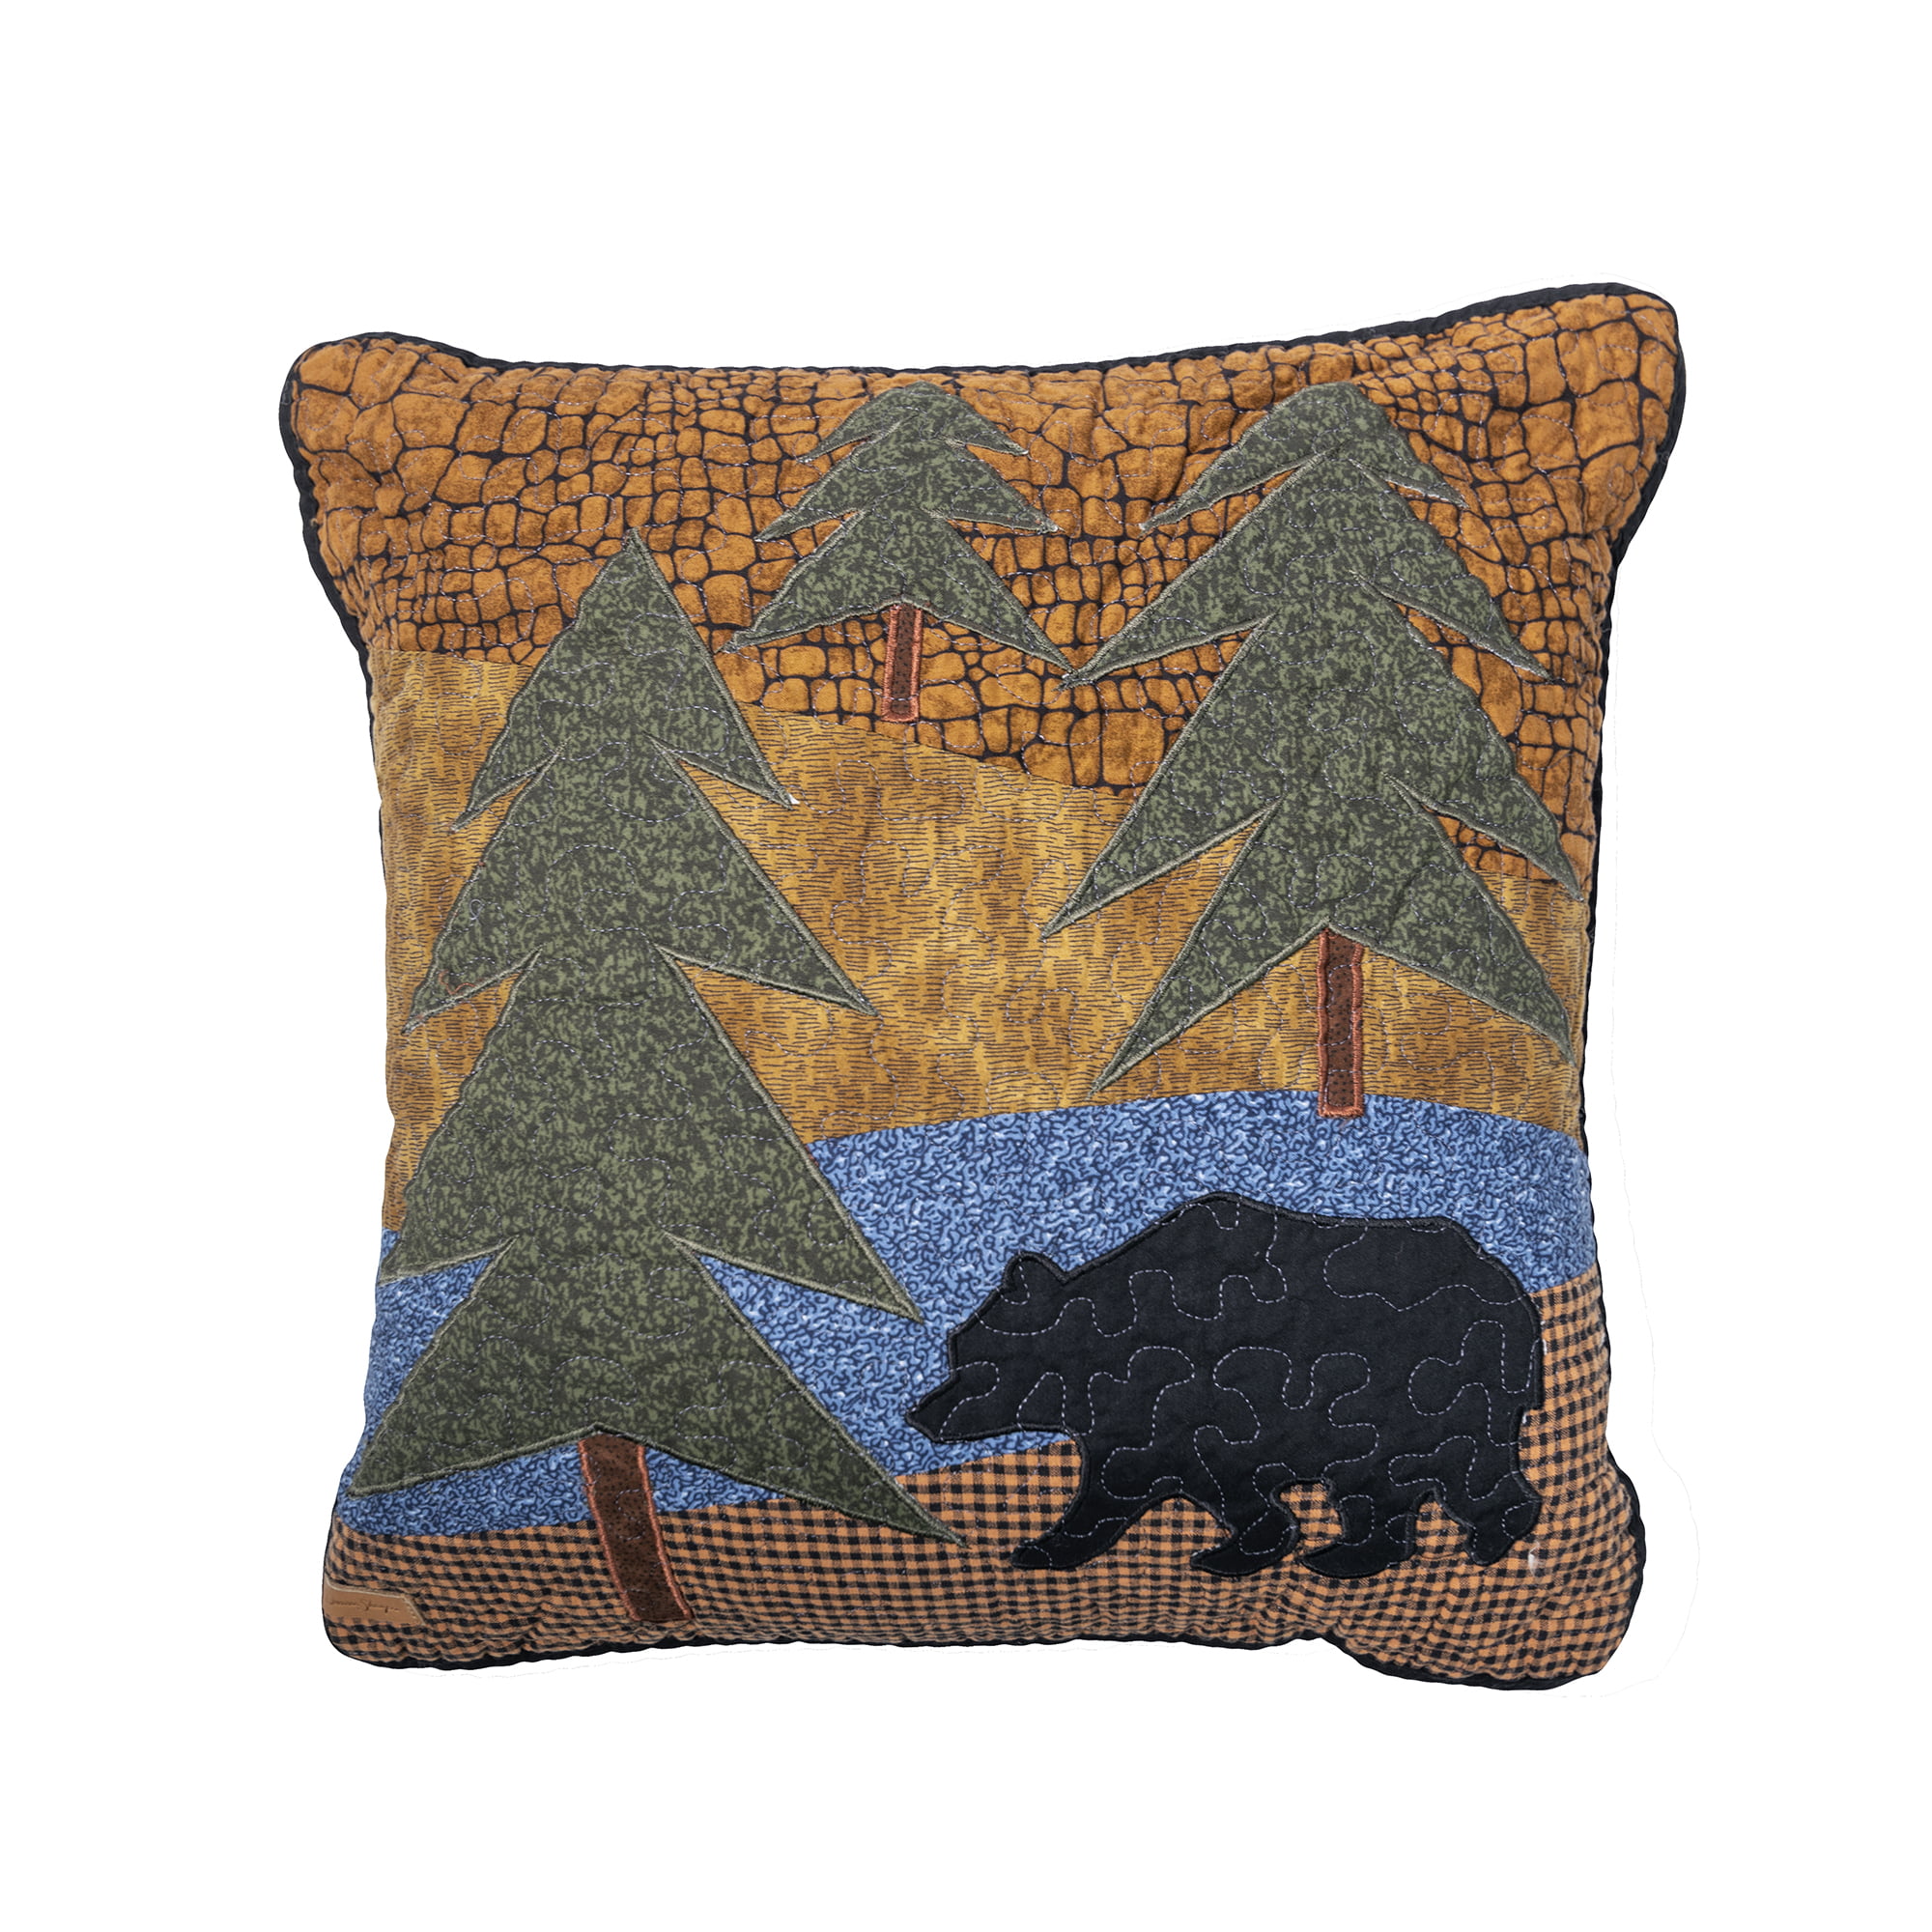 90901 16 X 16 In. Midnight Bear Decorative Pillow, Multi Color